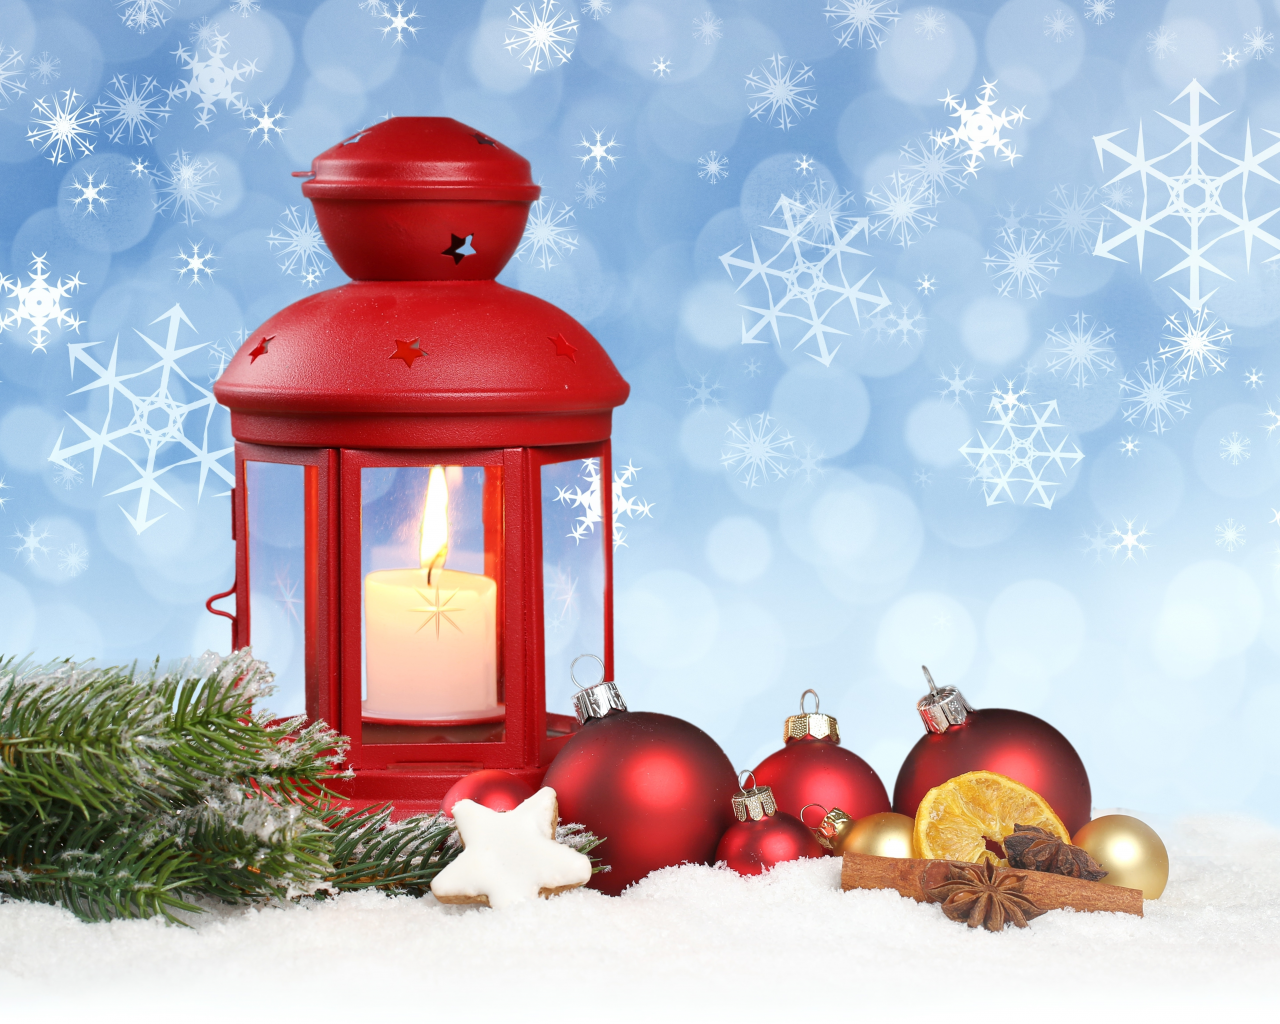 snow , lantern, stars, merry christmas, balls, ornaments, new year, snowflake, новый год